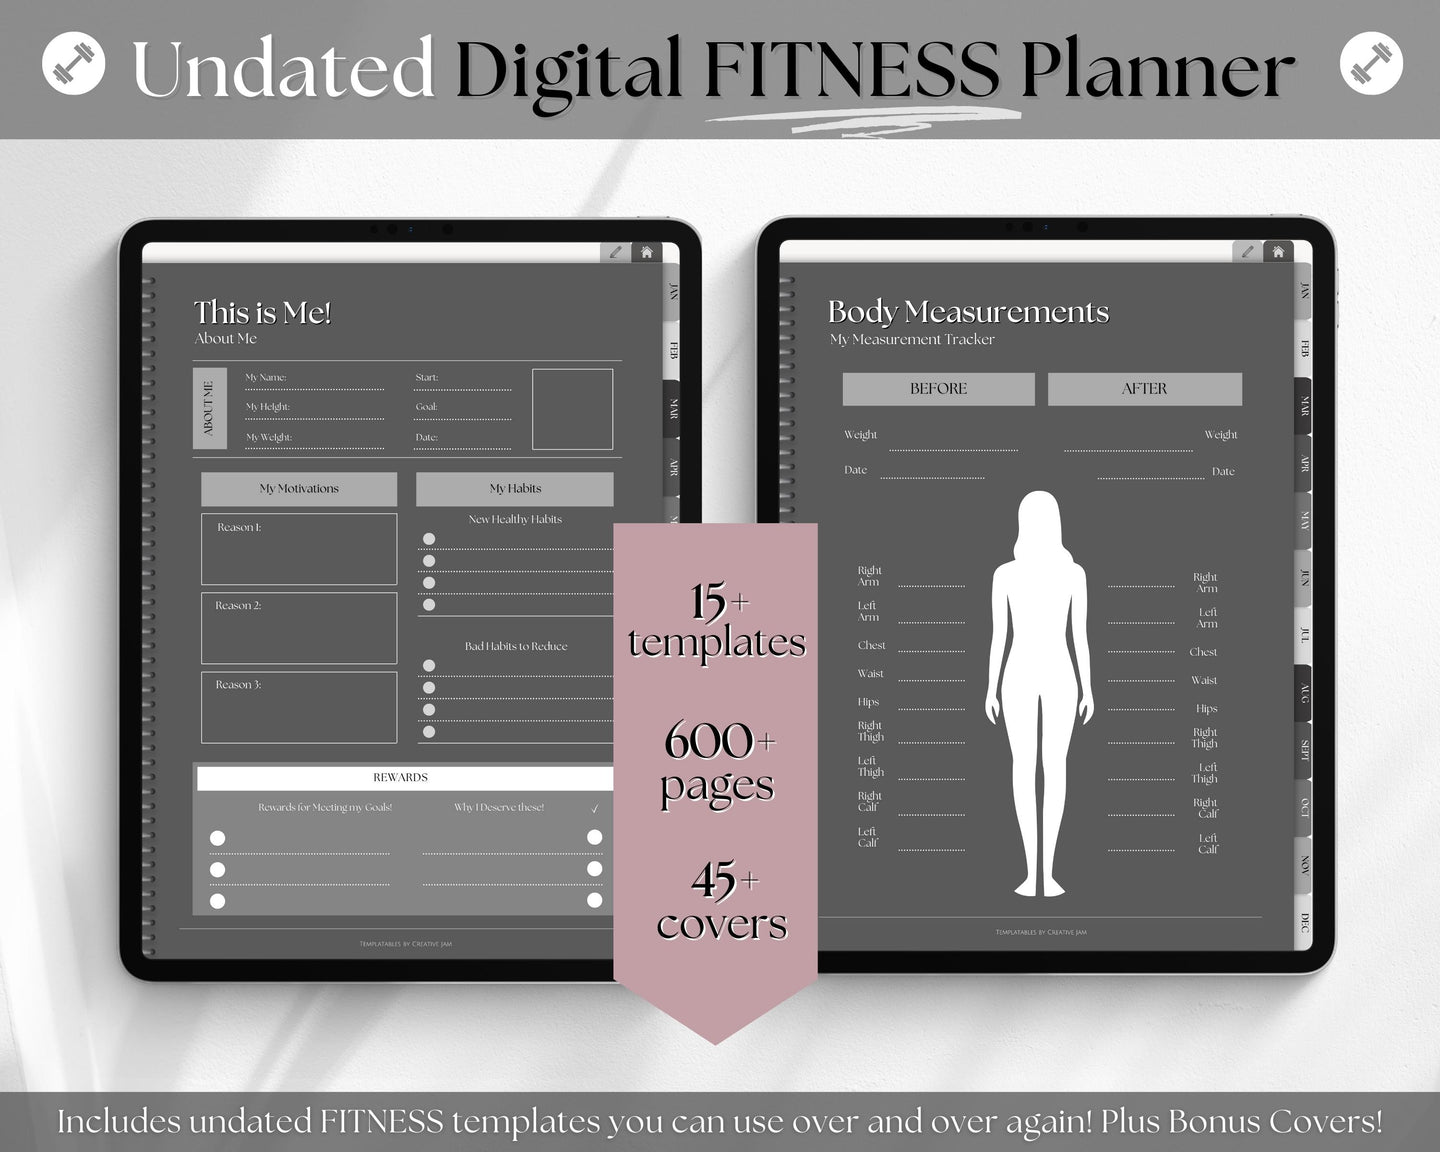 UNDATED Digital Fitness Planner | iPad GoodNotes Fitness Journal, Weight Loss Tracker & Workout Planner | Dark